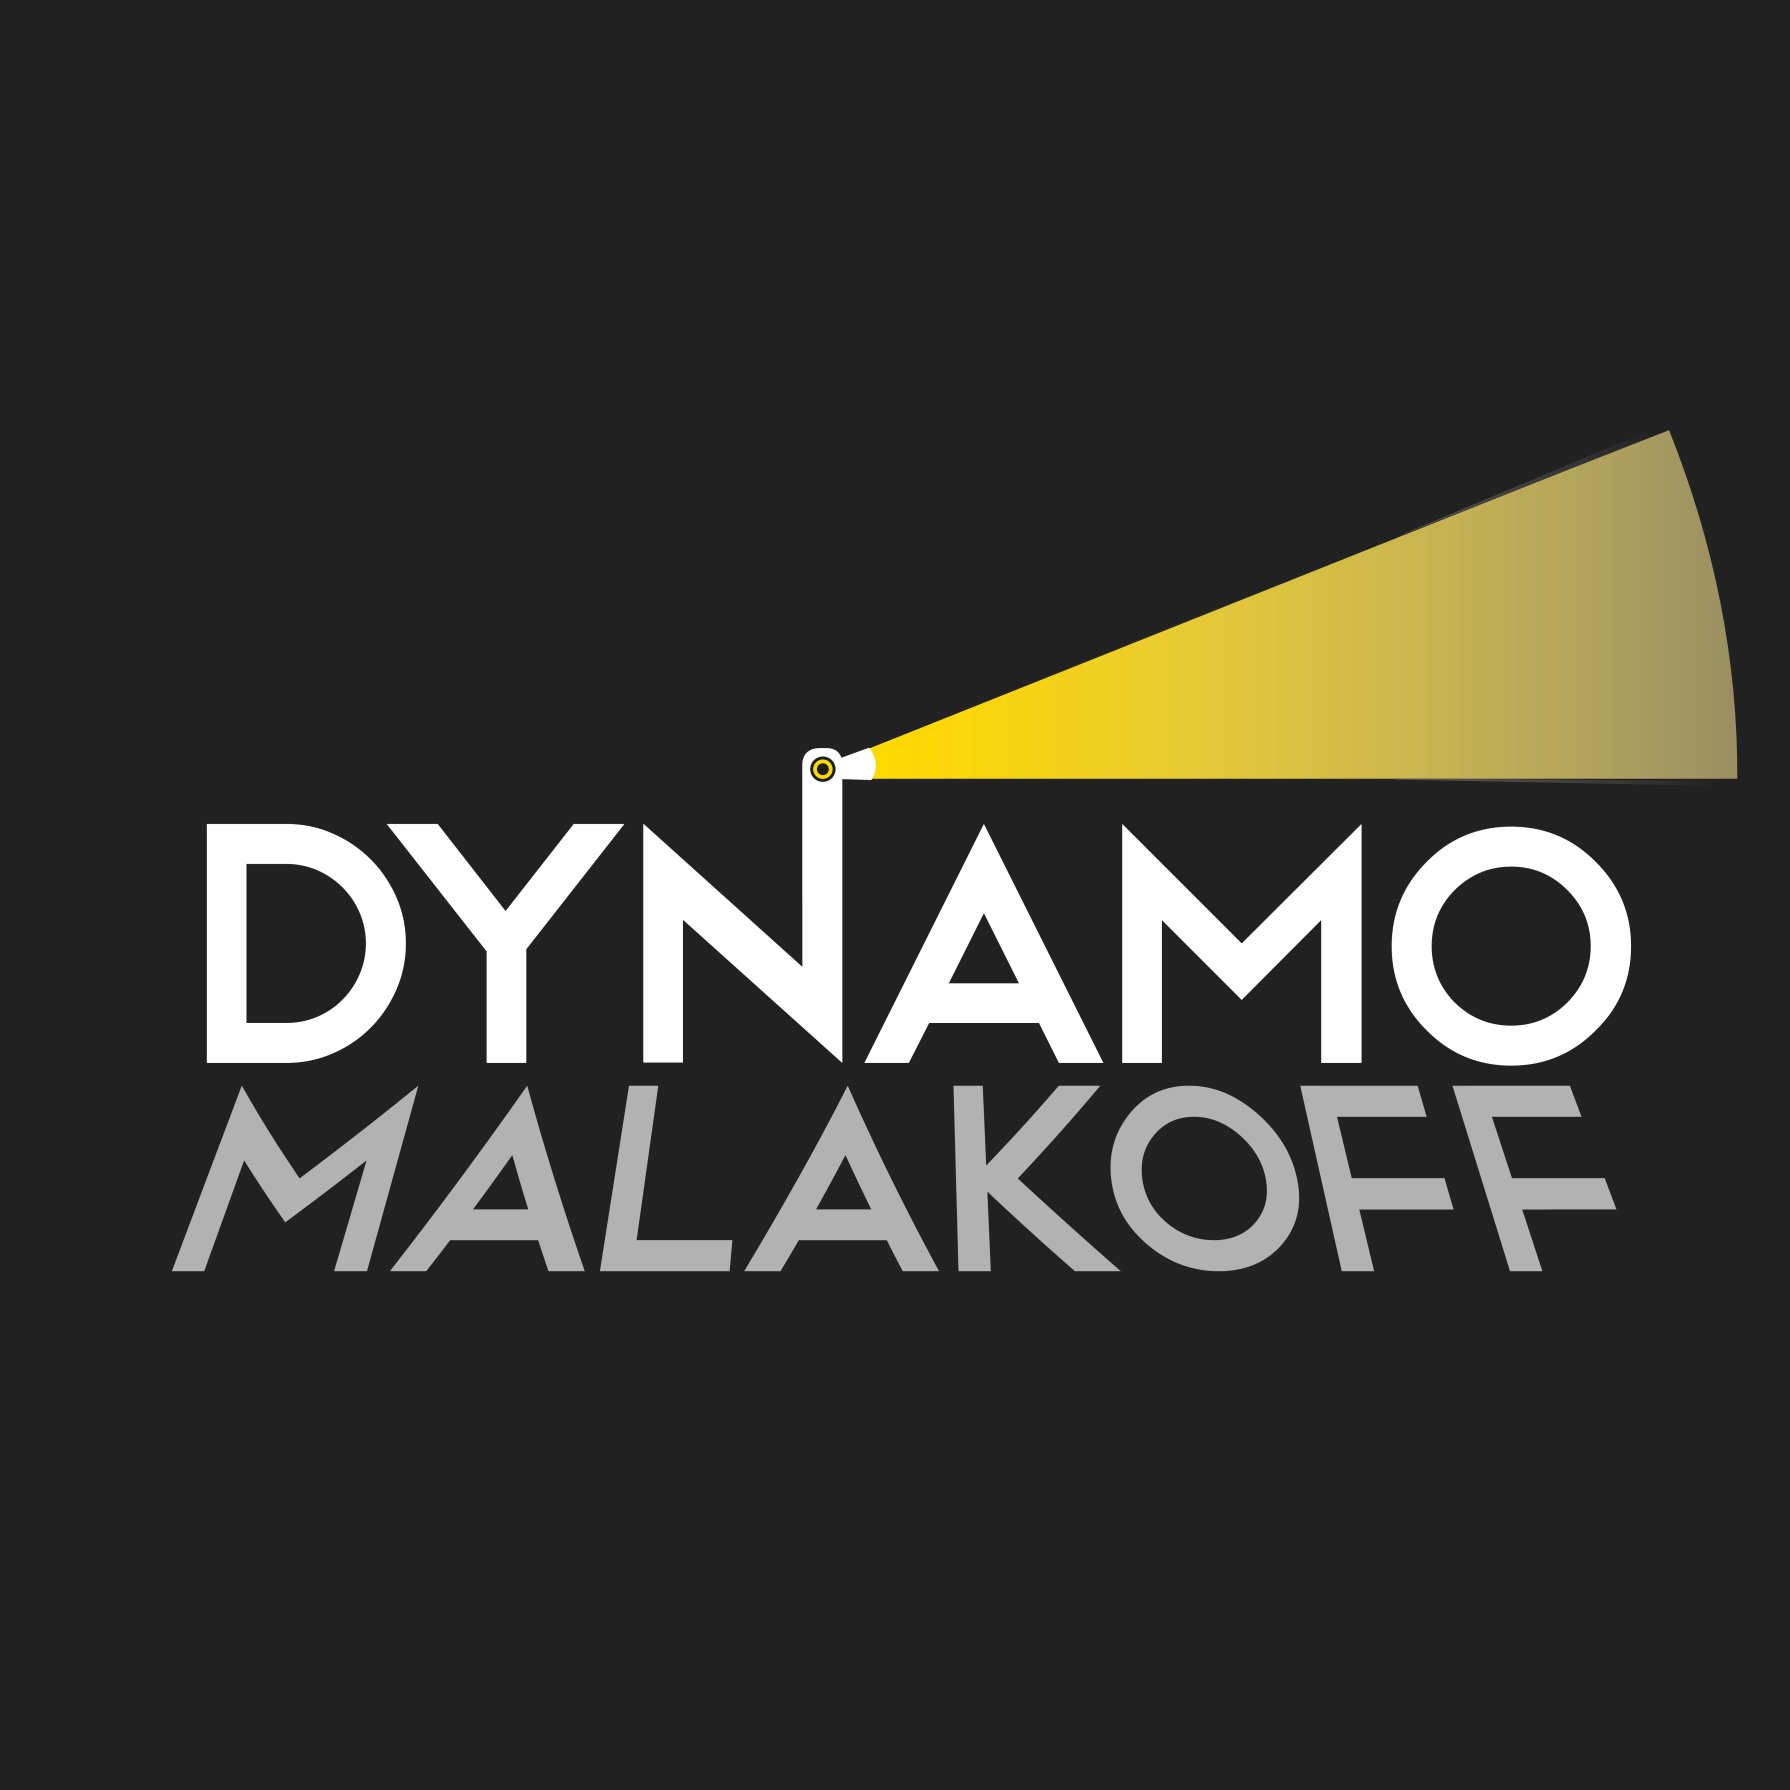 Dynamo Malakoff